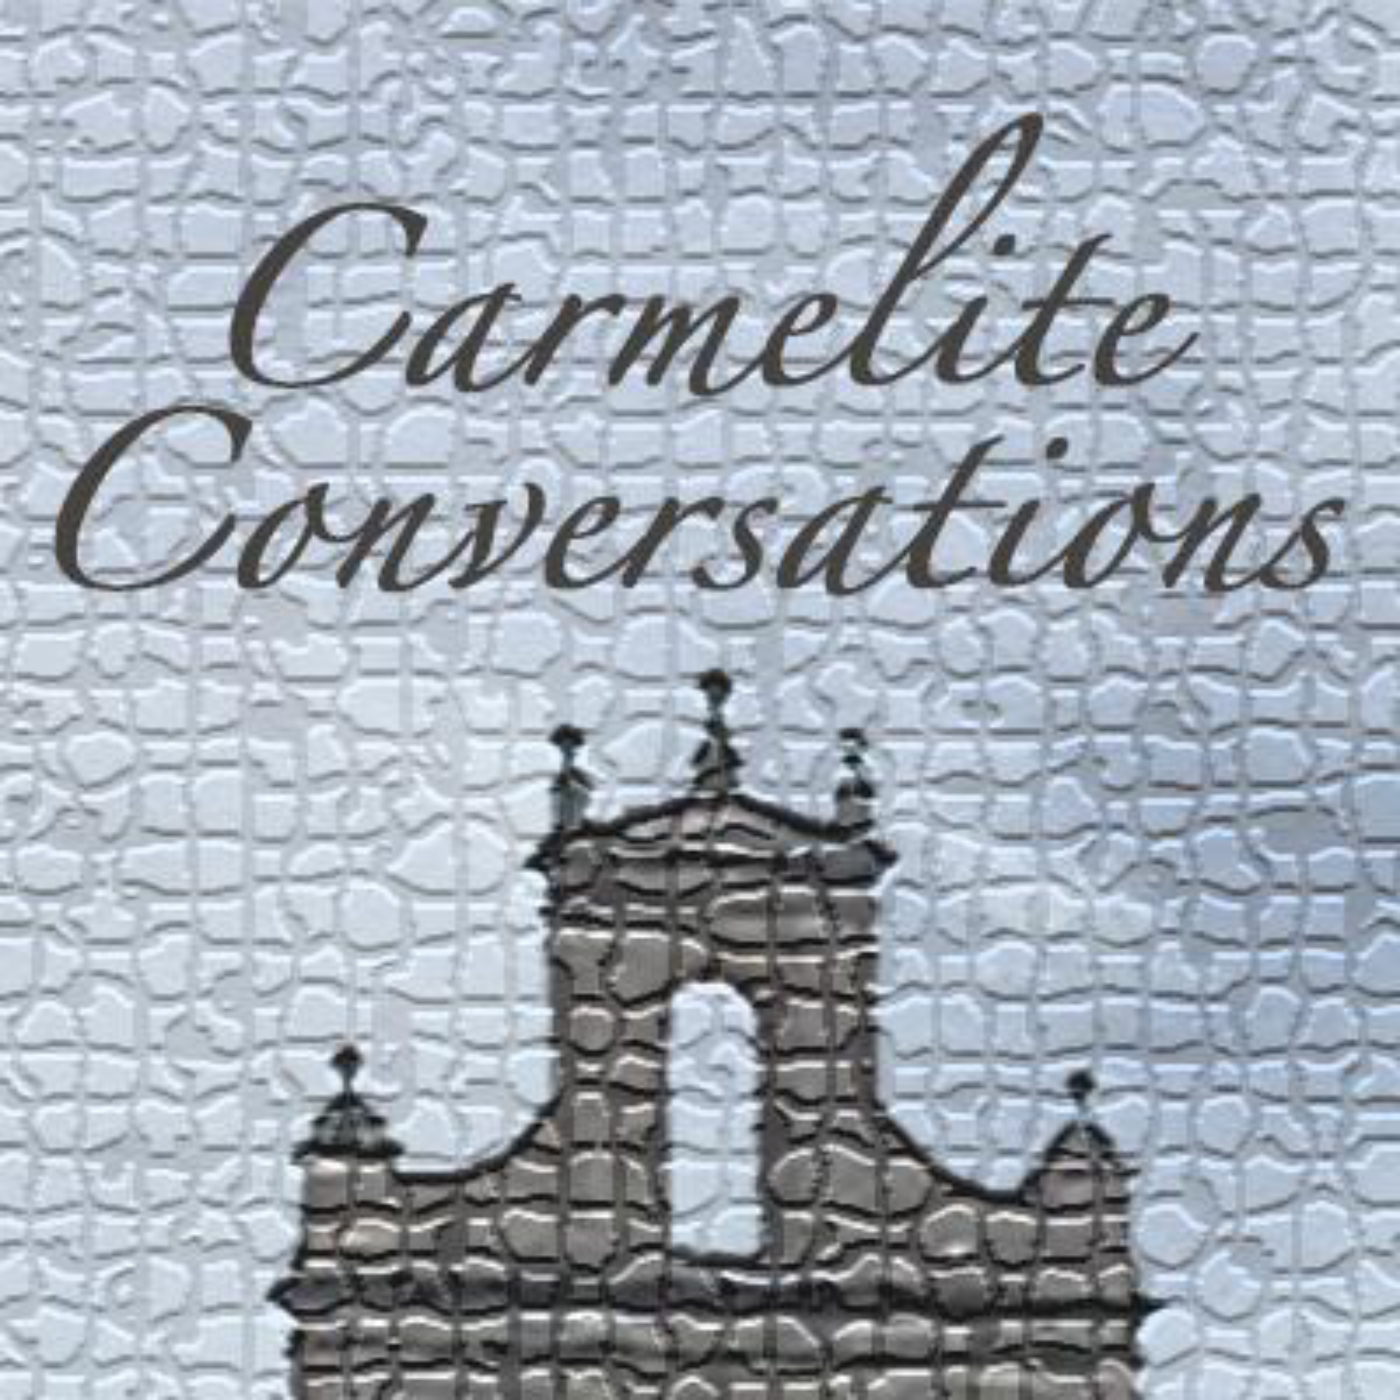 Carmelite Conversations